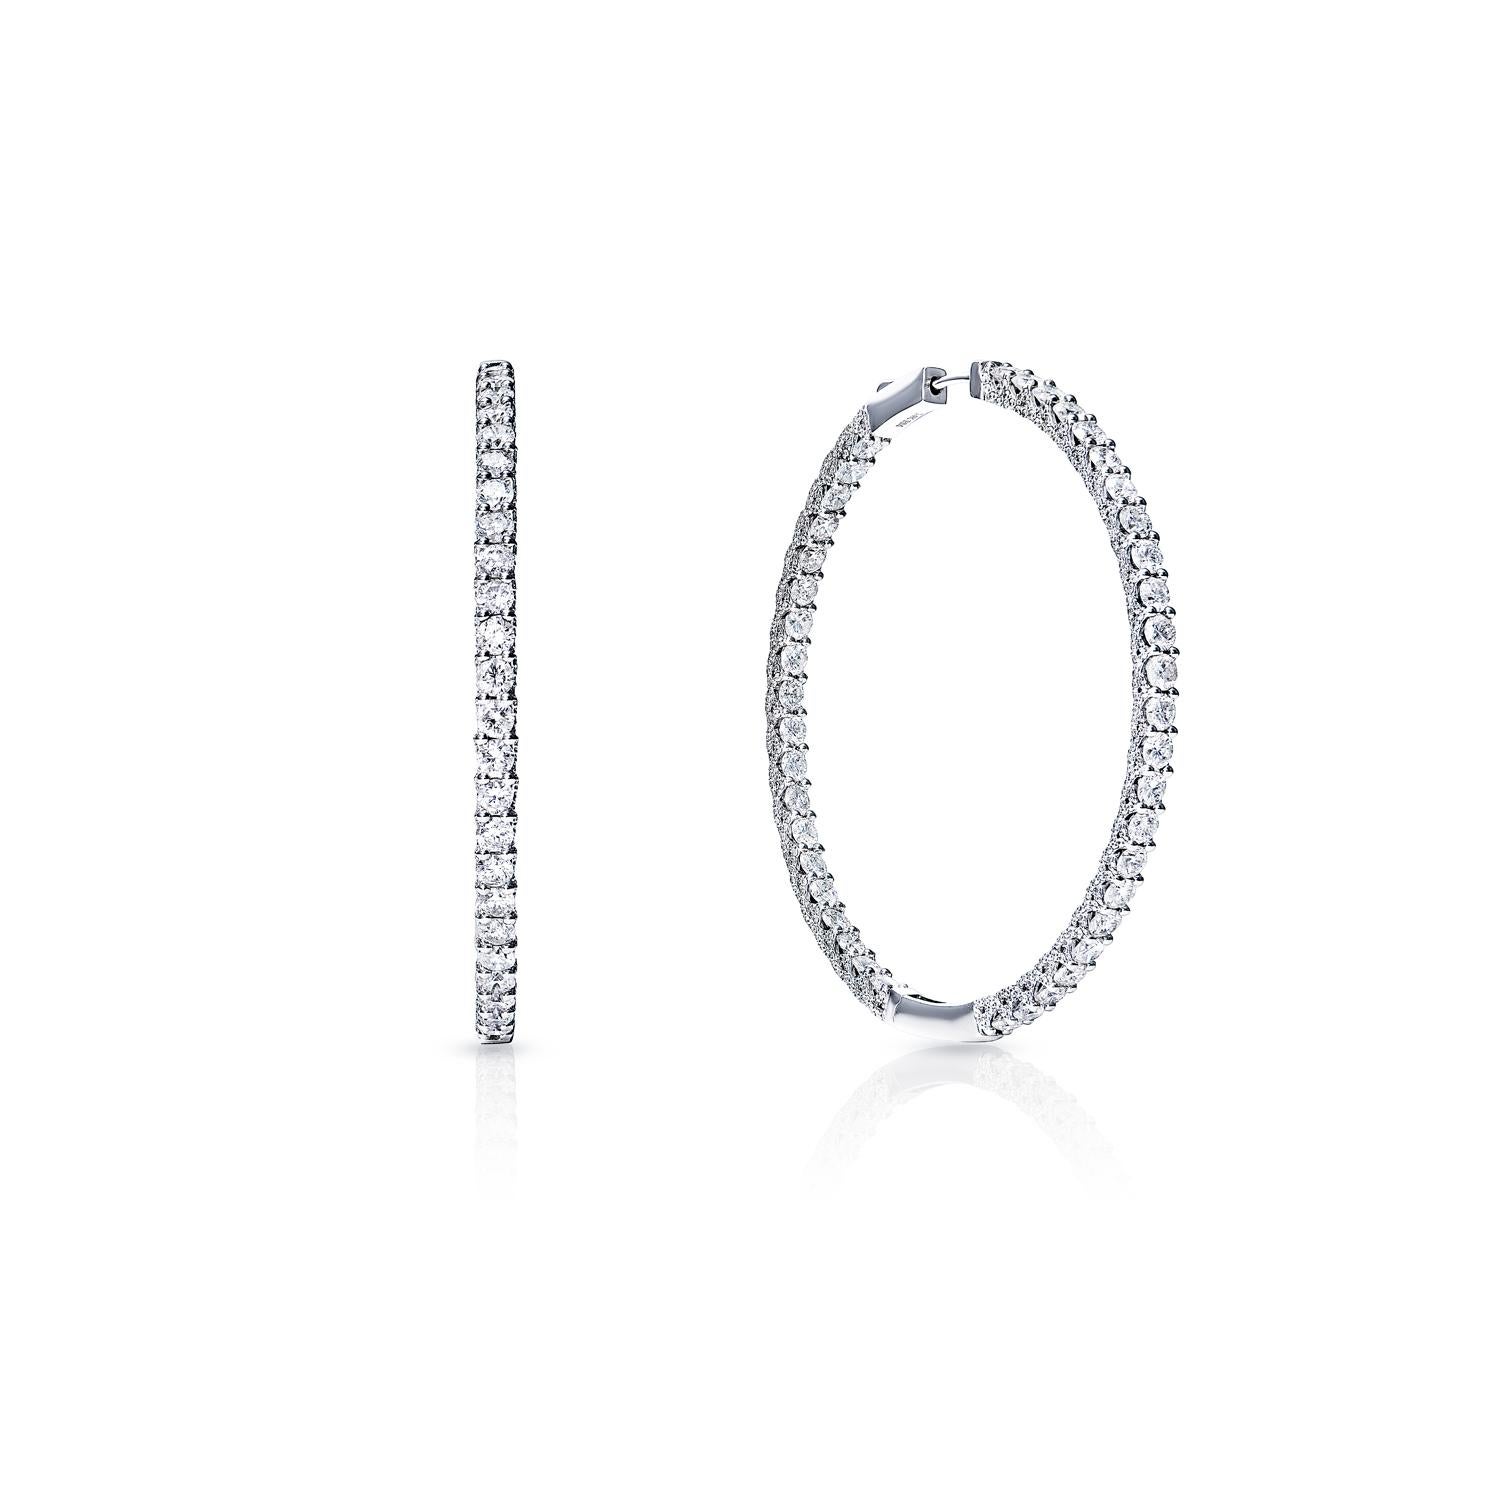 Diamond Hoop Earrings For Ladies:

Carat Weight: 11.61 Carats
Style: Round Brilliant Cut
Metal: 14 Karat White Gold
Style: Hoop Earrings